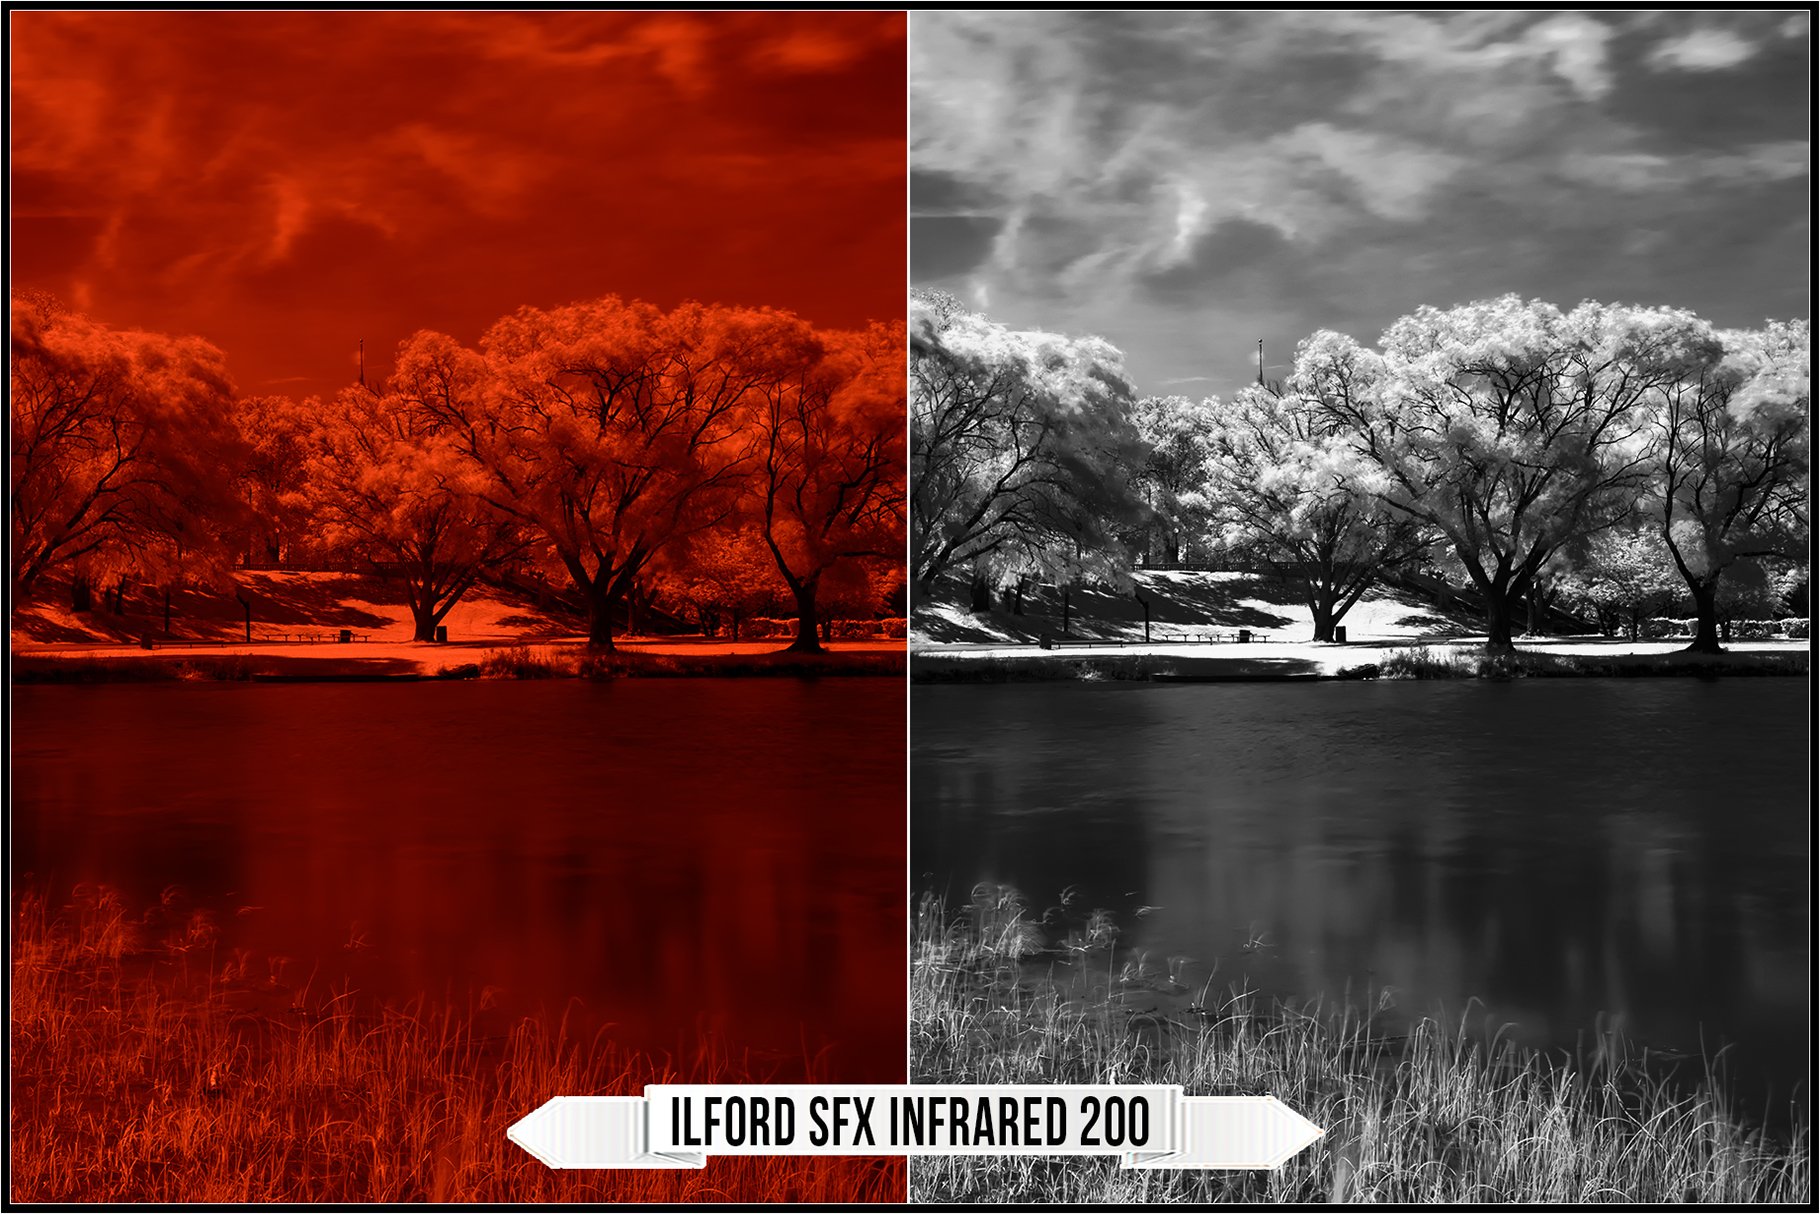 ilford sfx infrared 200 283